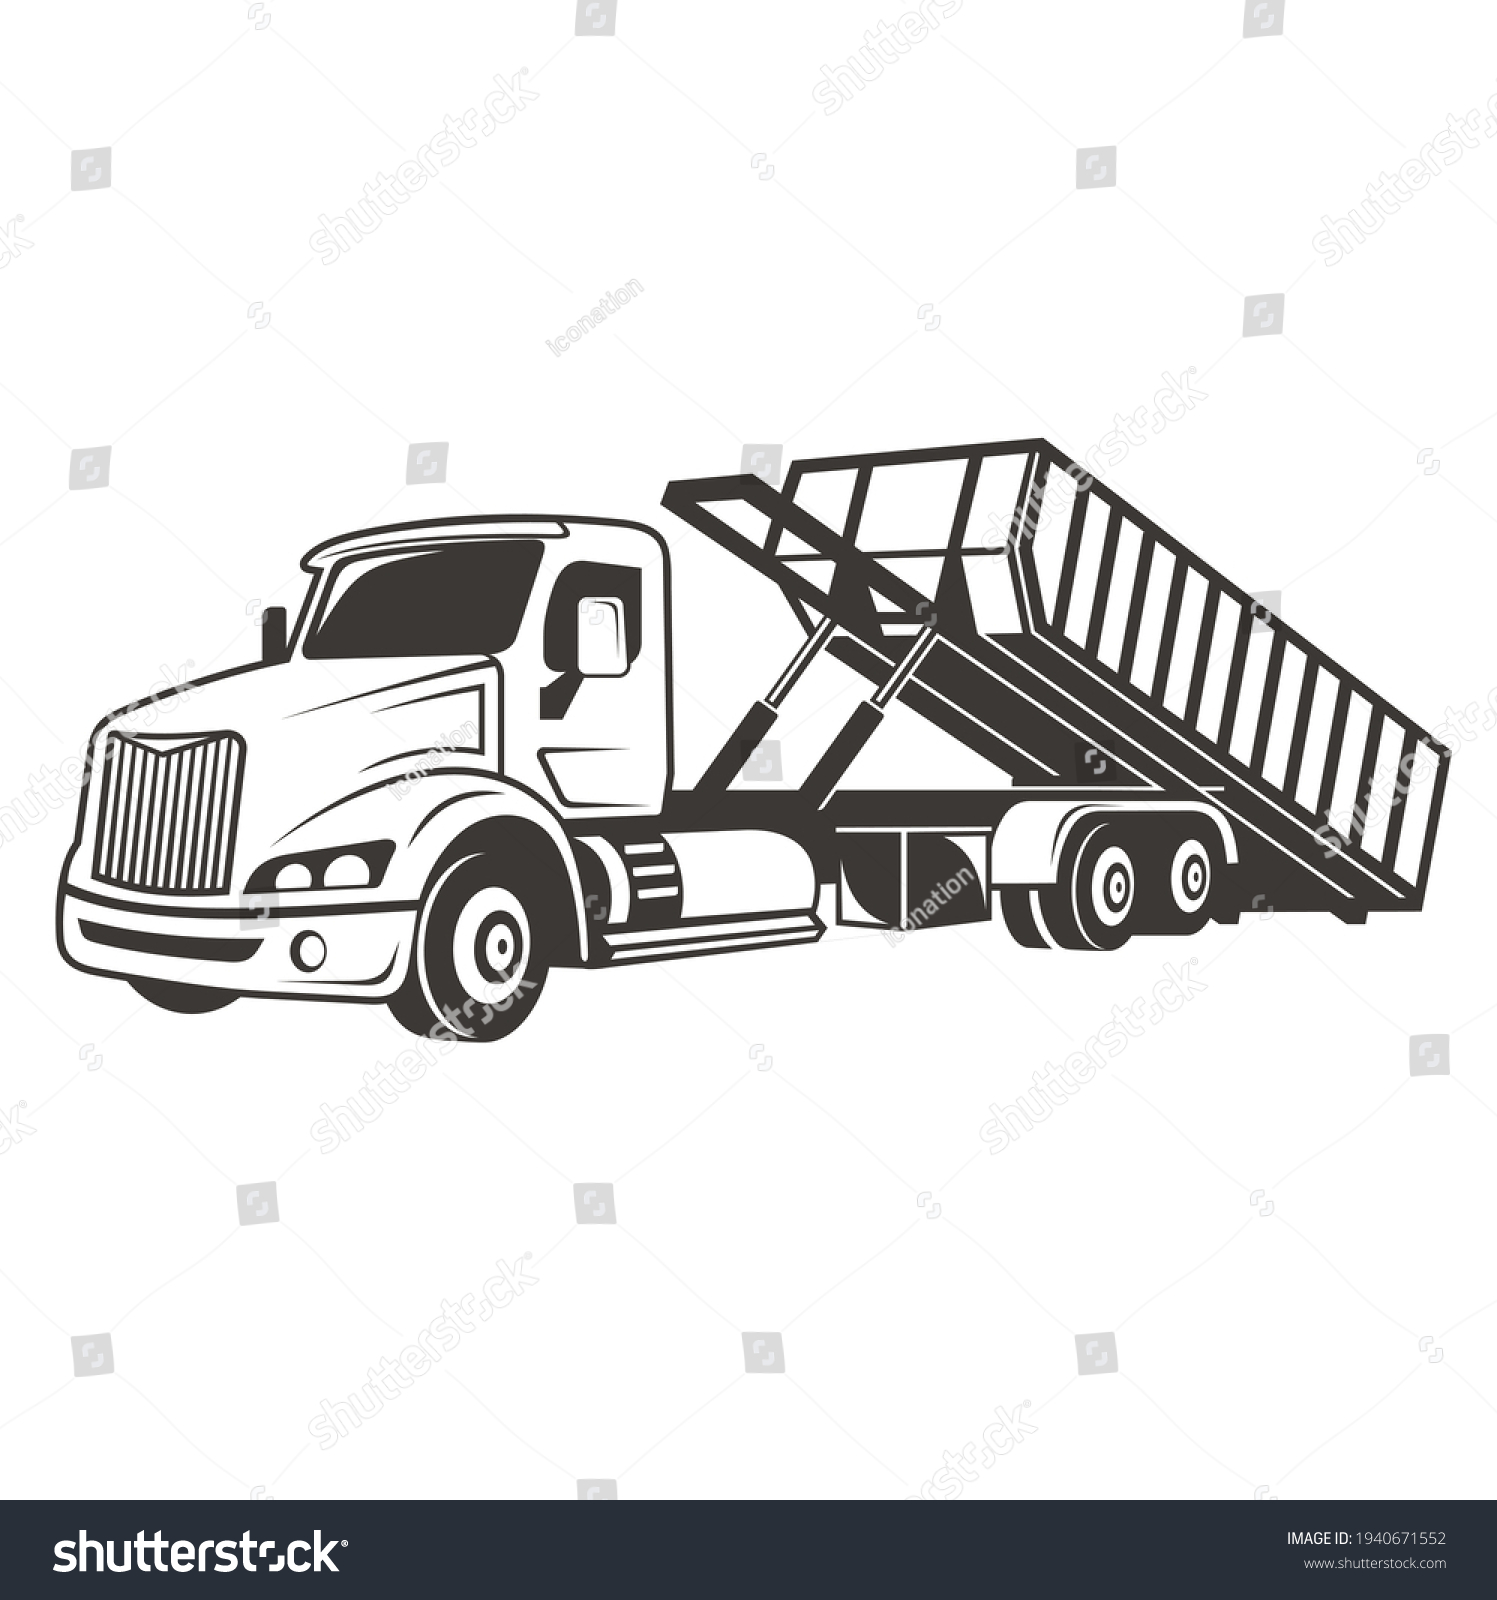 SVG of illustration of roll off truck or dumpster truck, vector art. svg